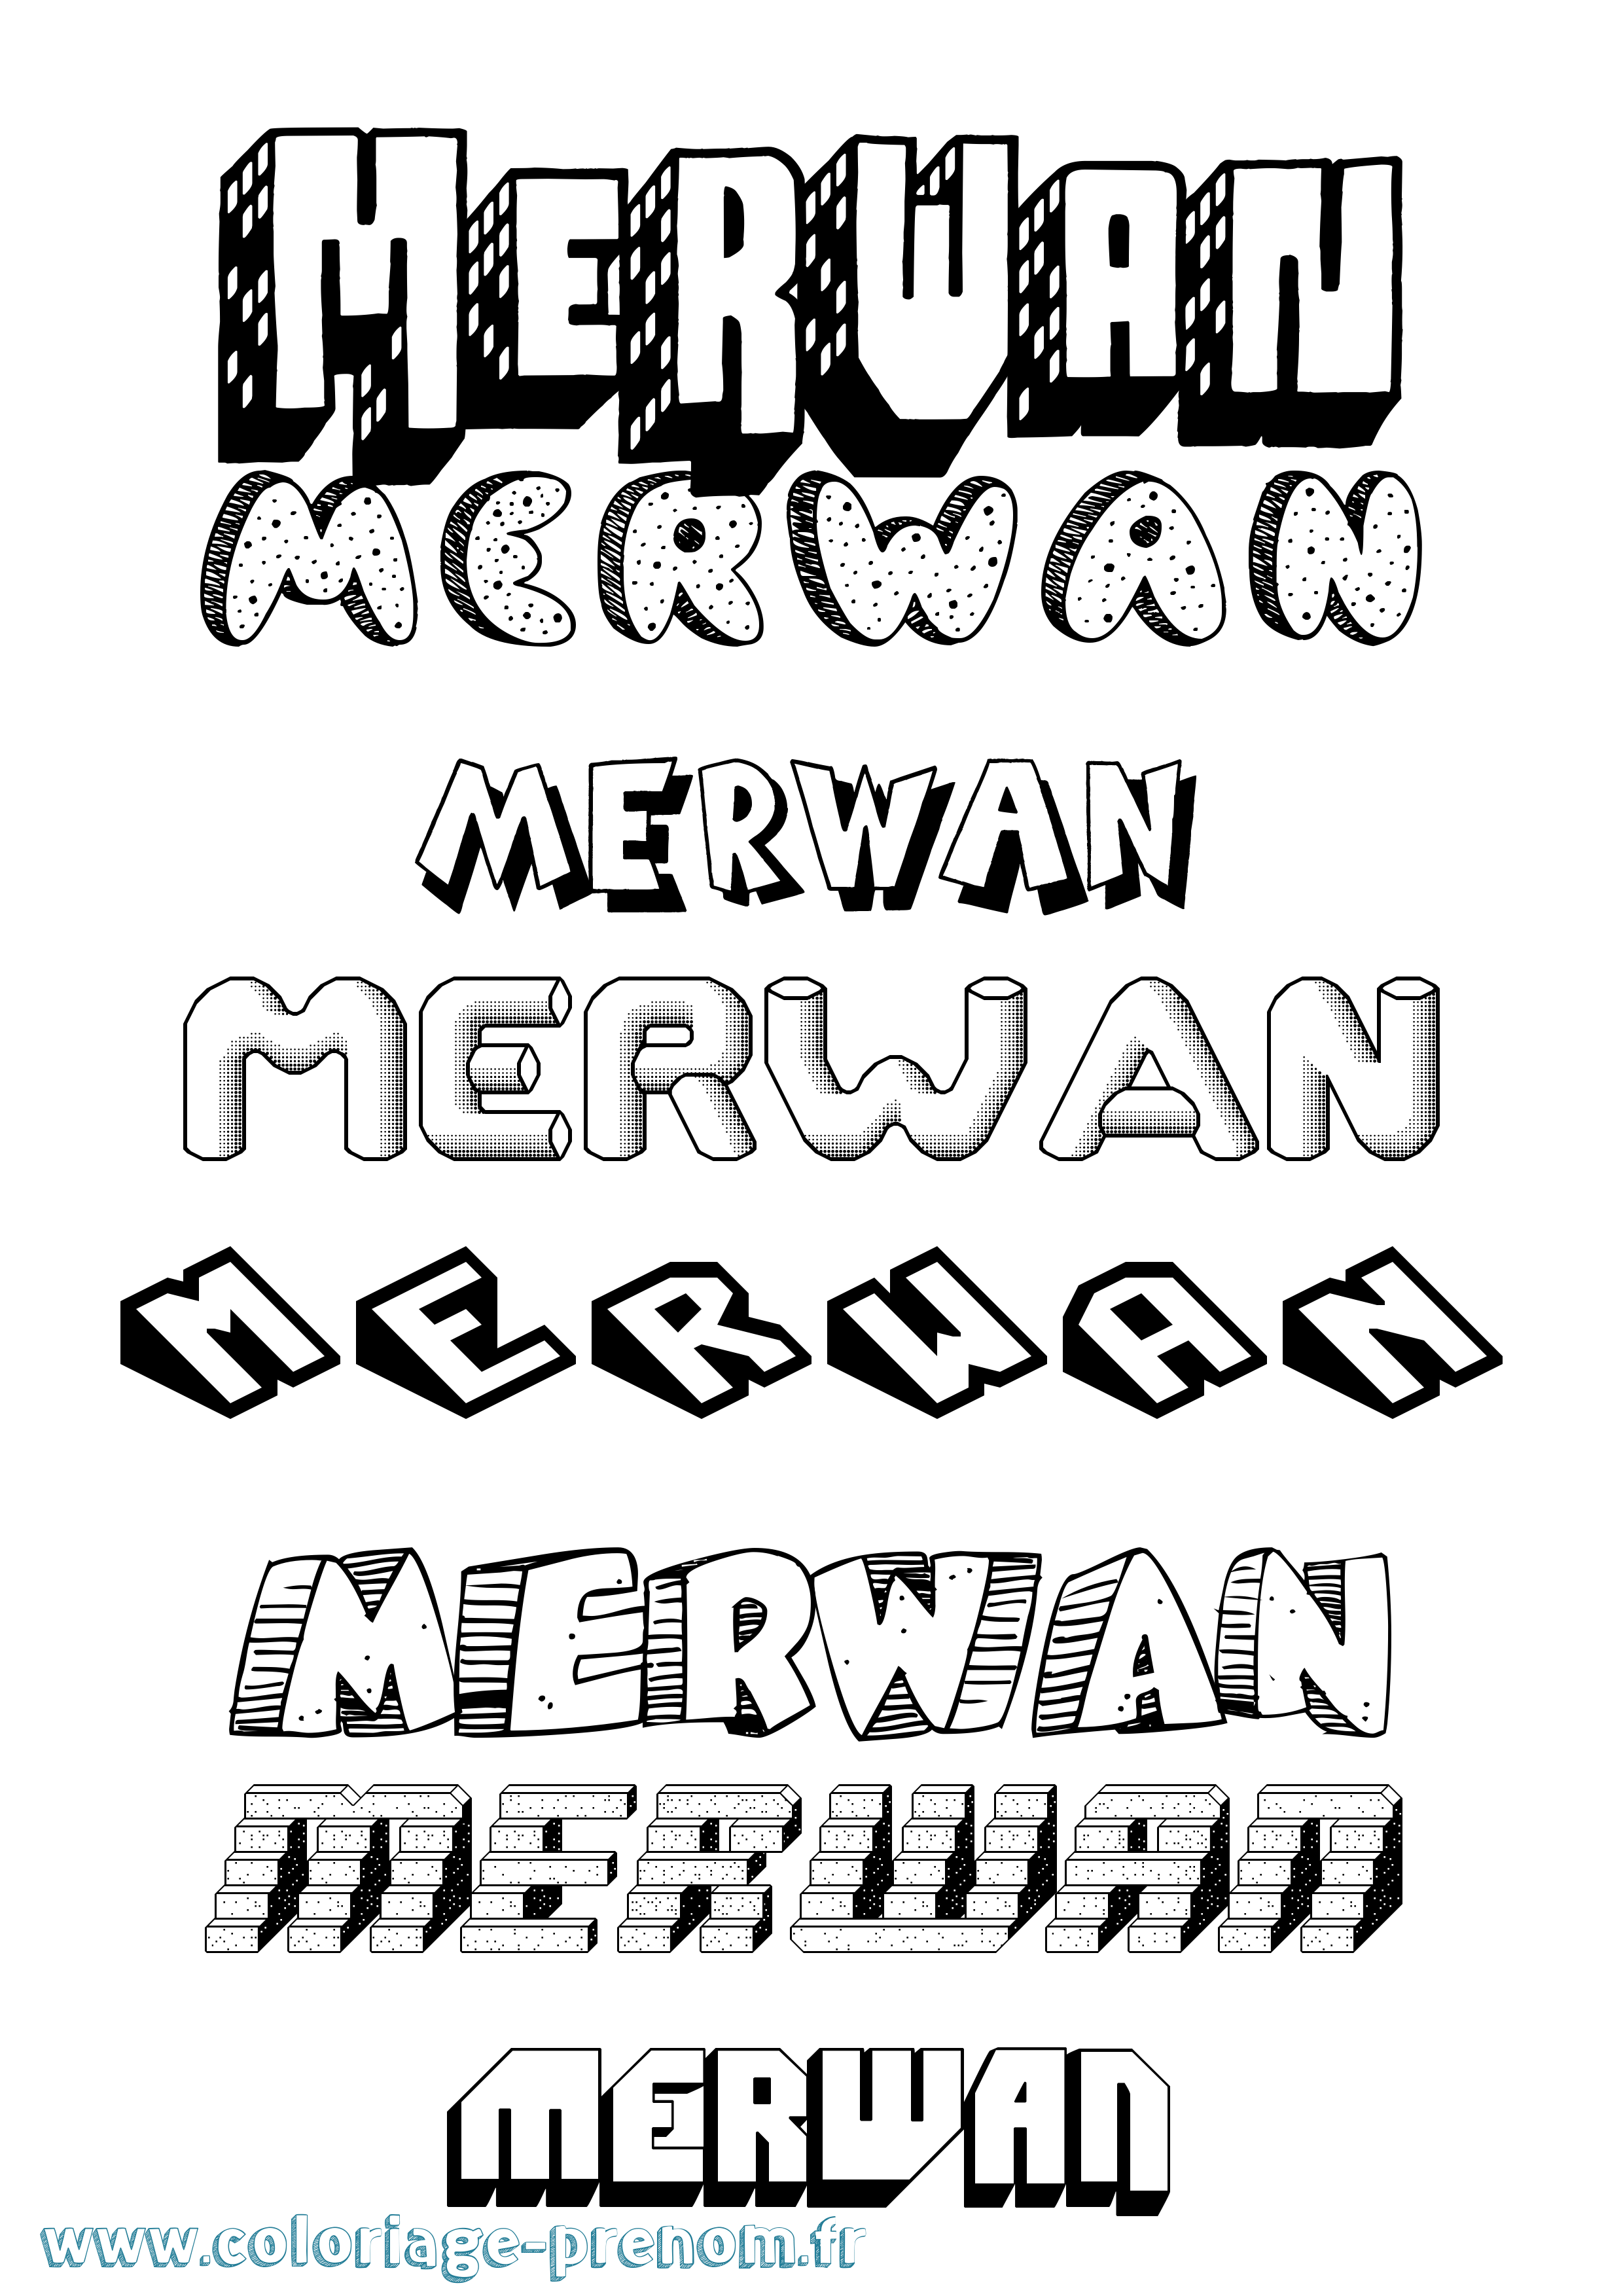 Coloriage prénom Merwan Effet 3D